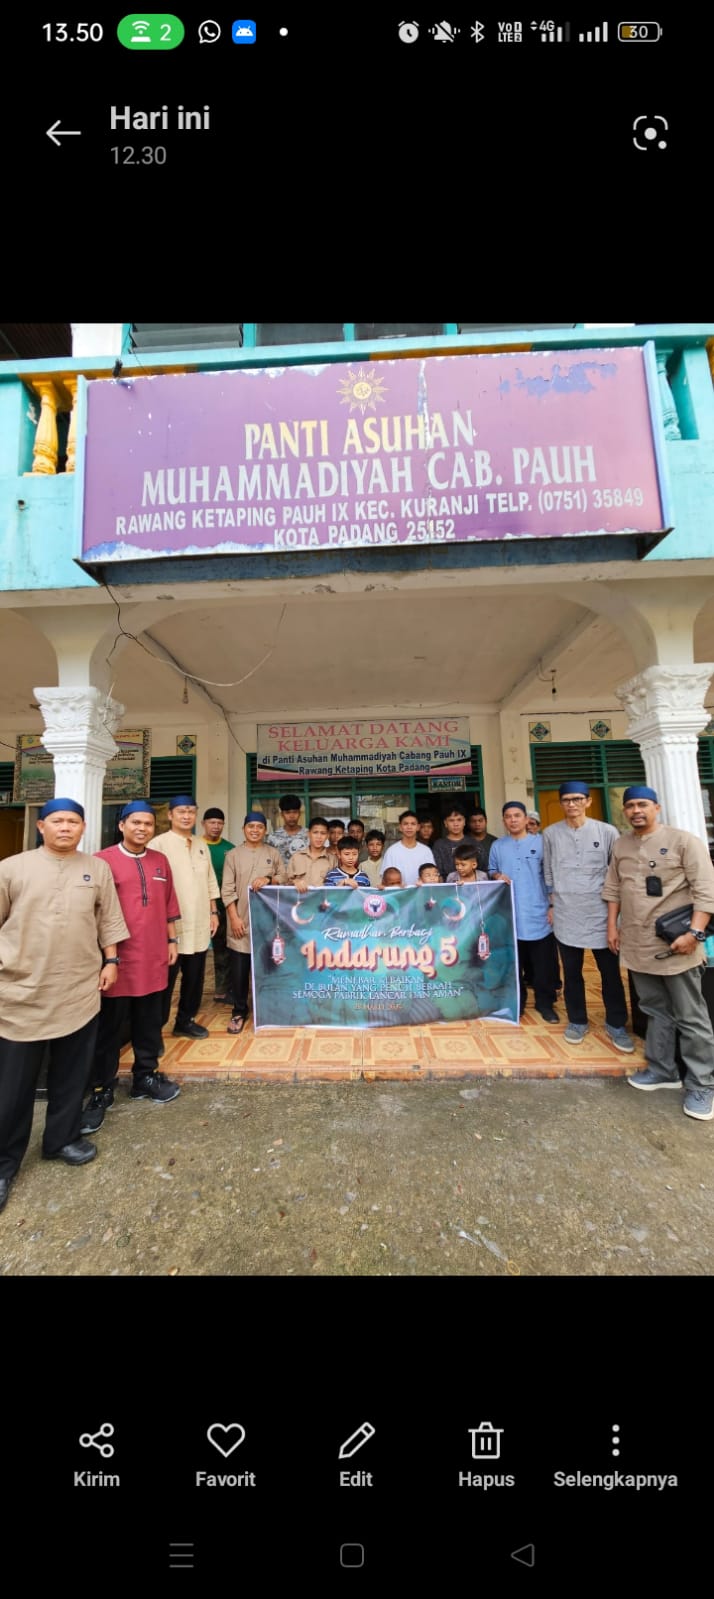 Meningkatkan ukhuwah islamiyah di Bulan Suci Ramadan, karyawan Pabrik Indarung IV, V dan VI PT Semen Padang melakukan anjangsana ke tiga panti asuhan di Kota Padang